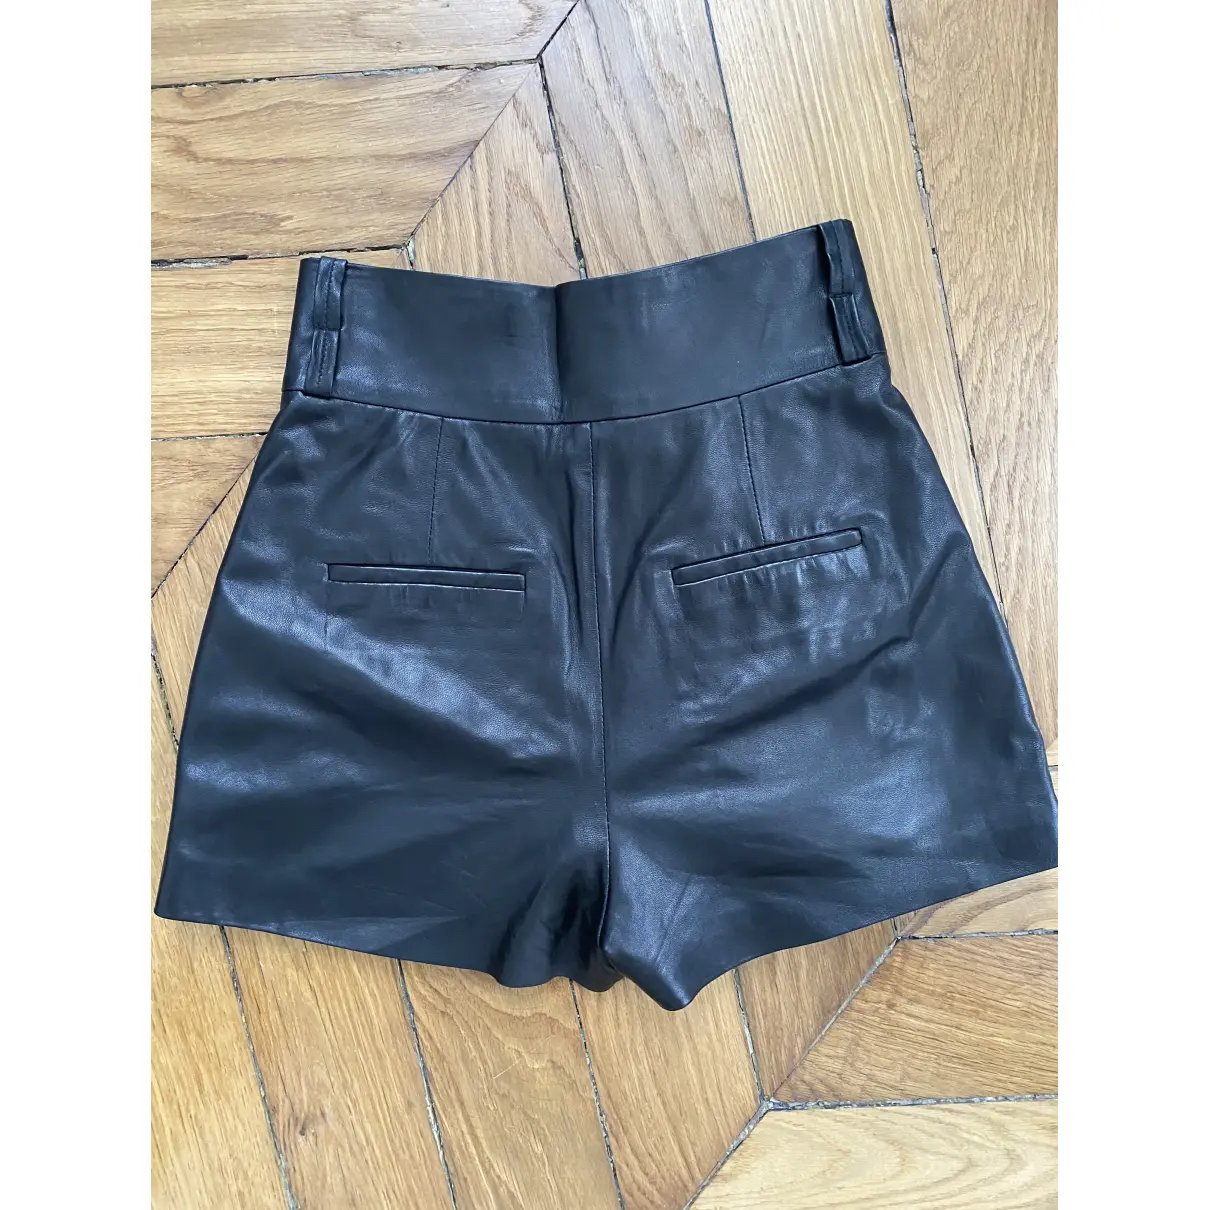 Buy Iro Leather shorts online